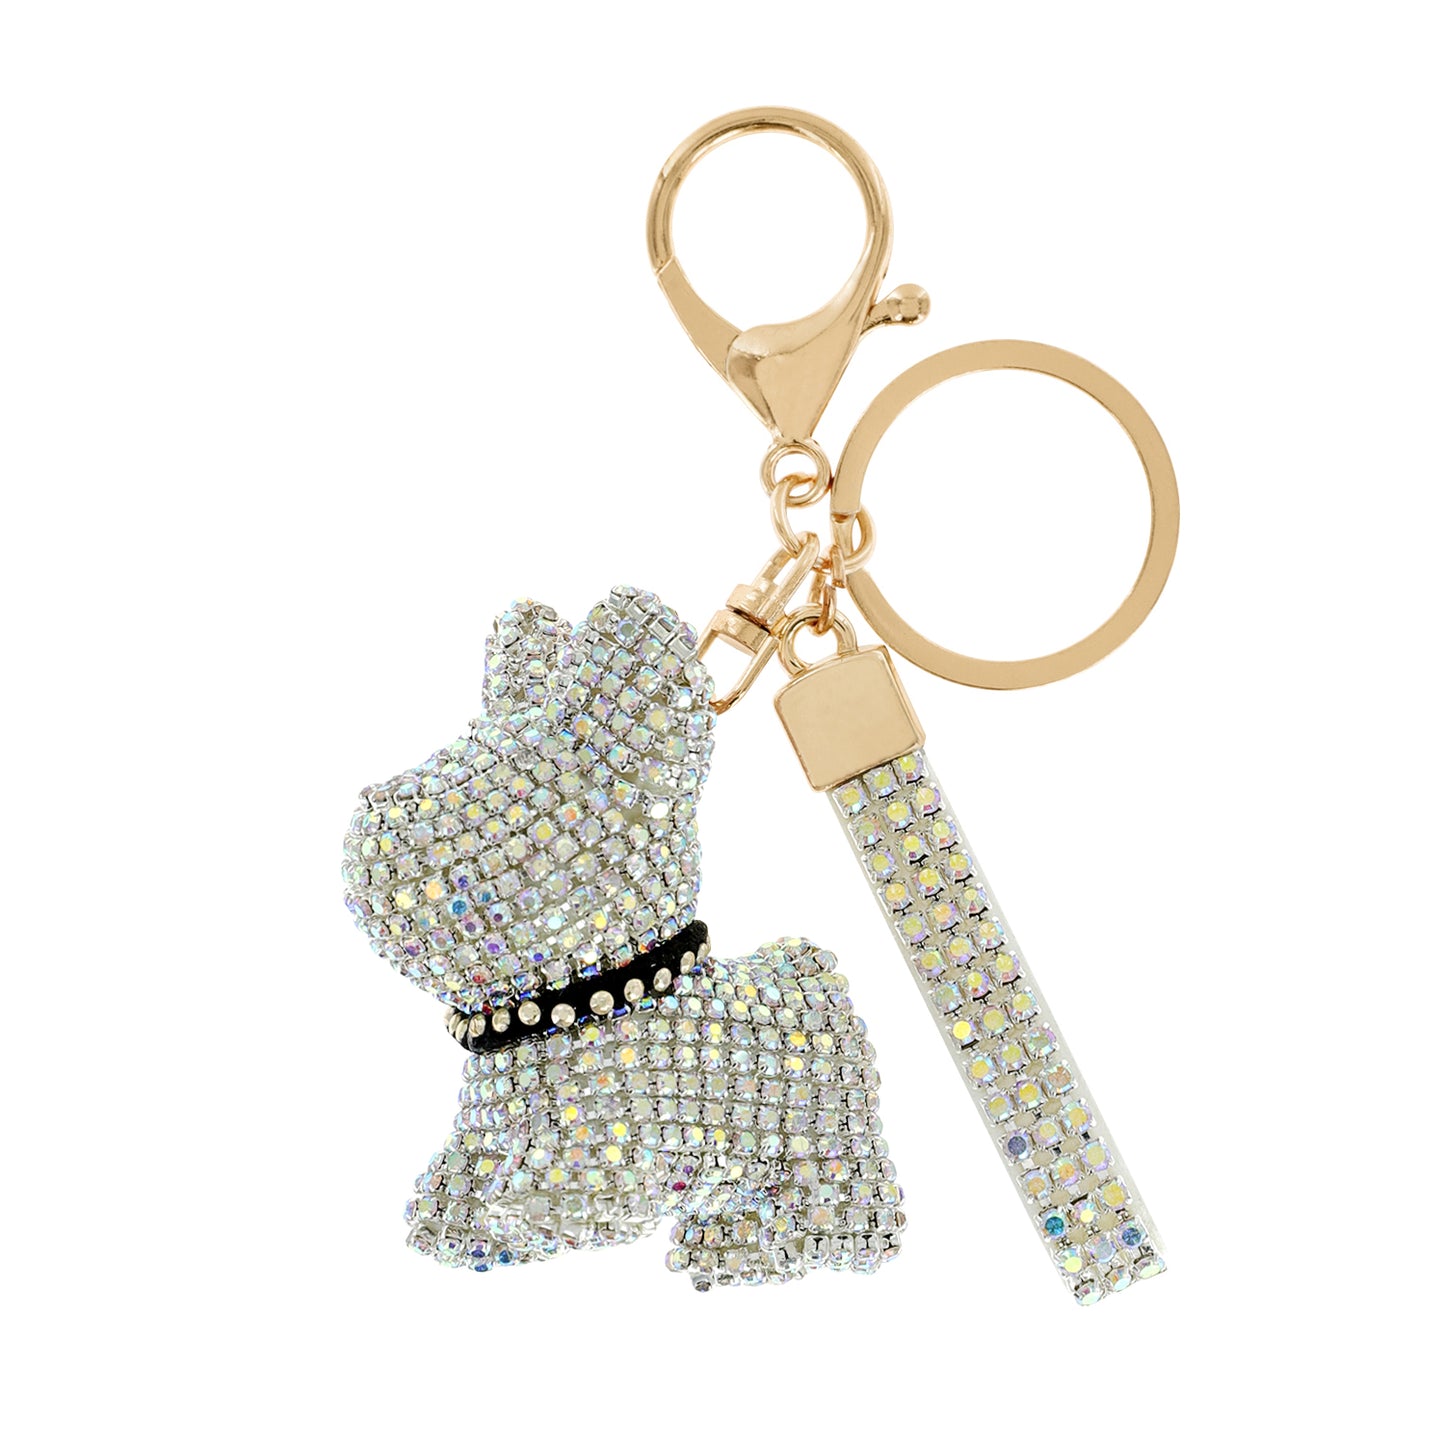 Rhinestone Dog Keychain with Wristlet - Iridescent